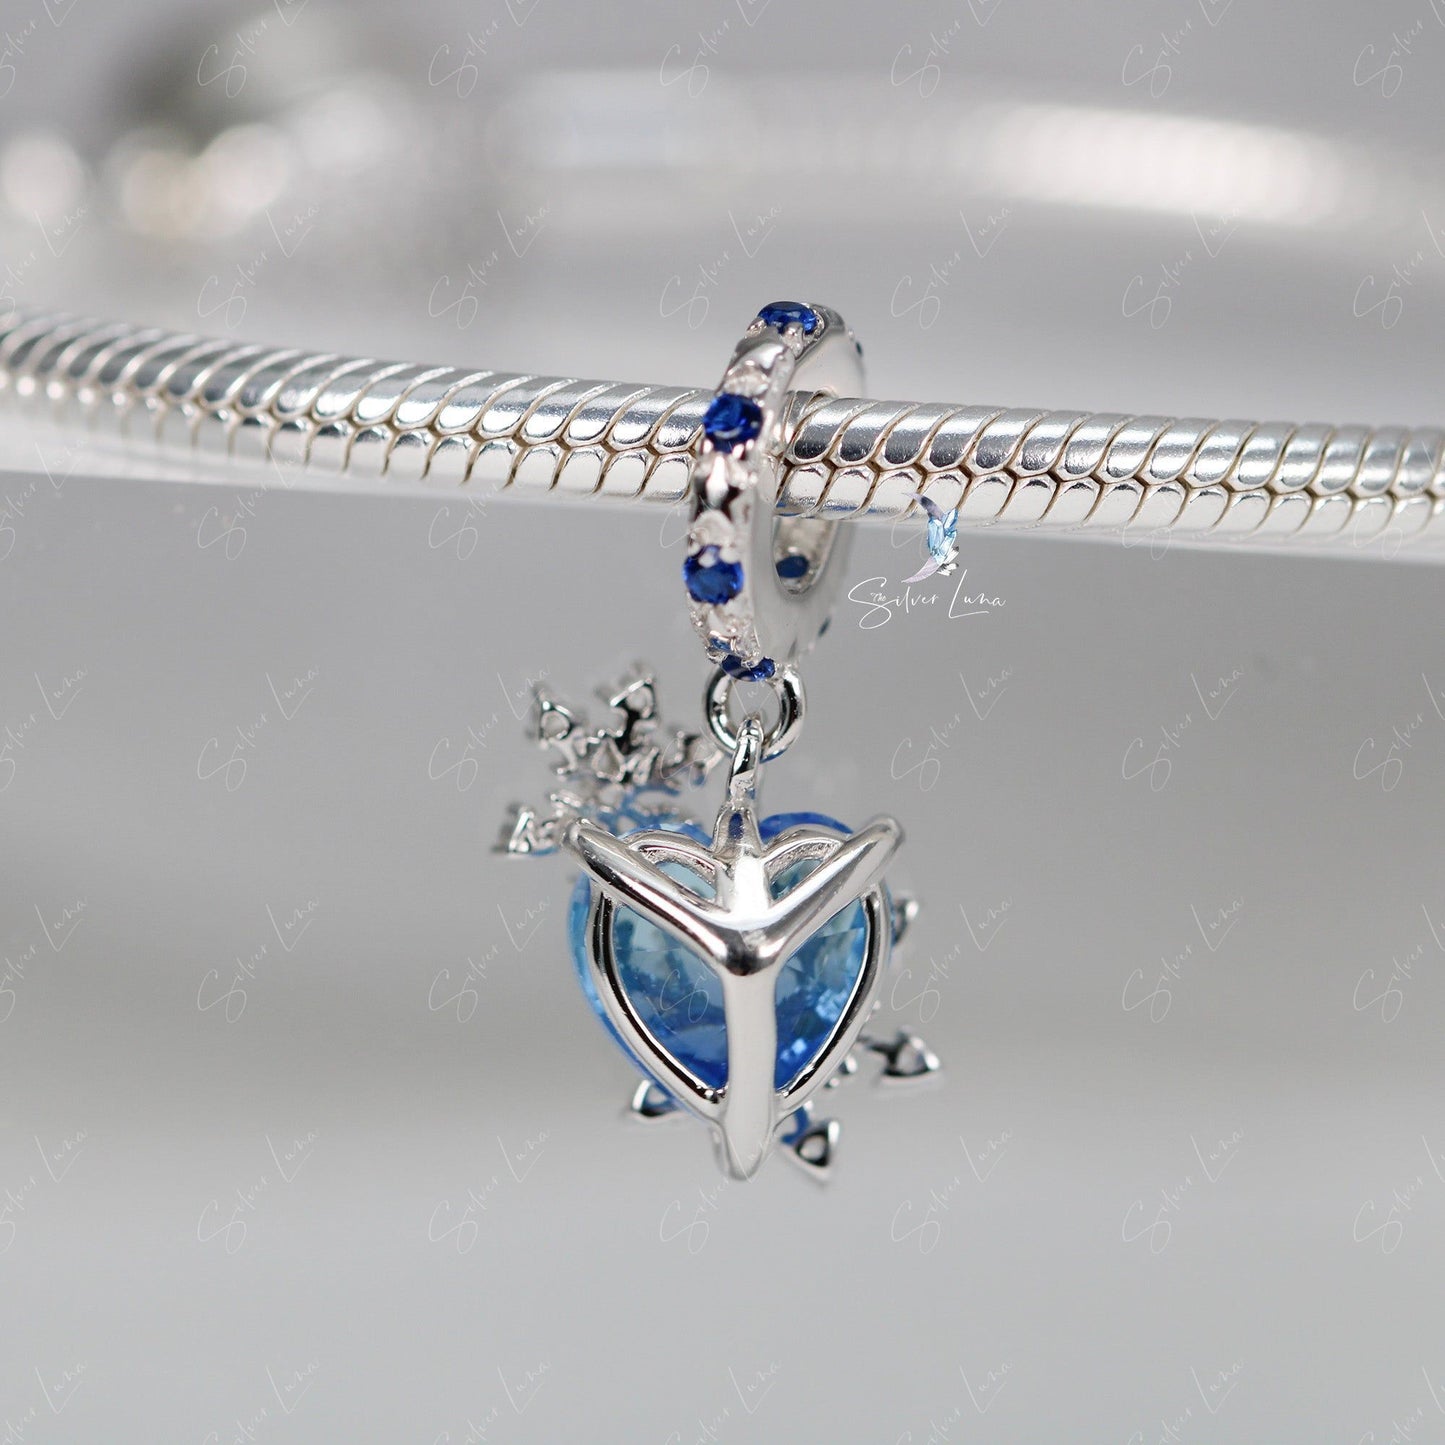 Heart snowflake sterling silver pendant charm